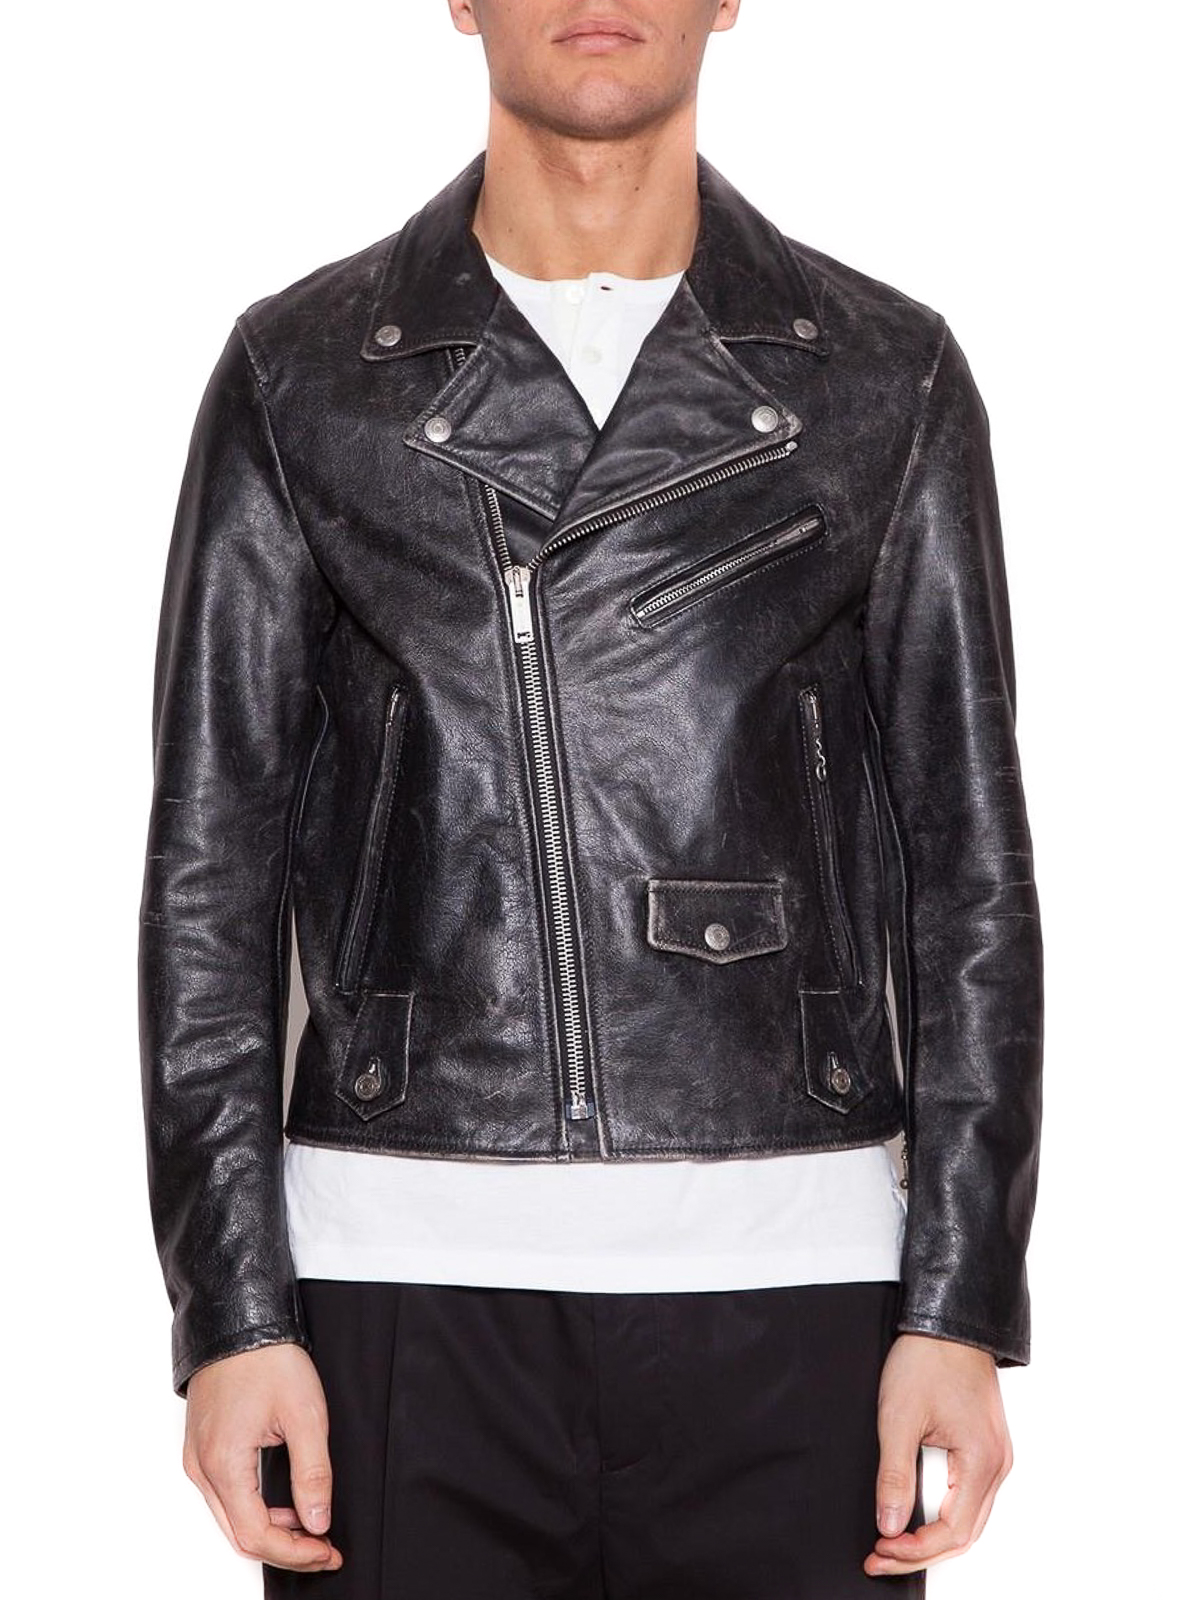 Leather jacket Golden Goose - Chiodo Golden calf leather jacket ...